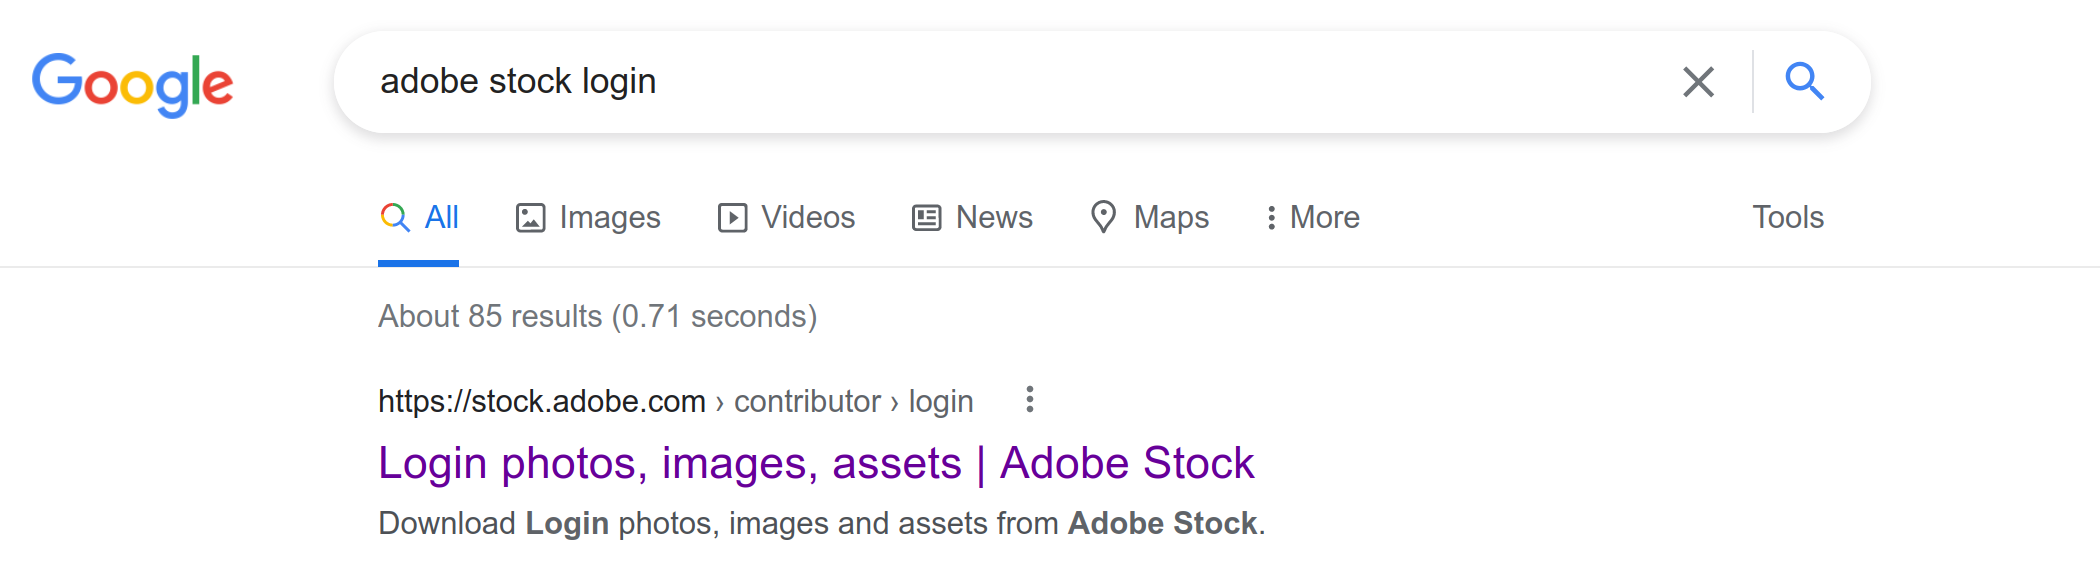 Google login portfolio